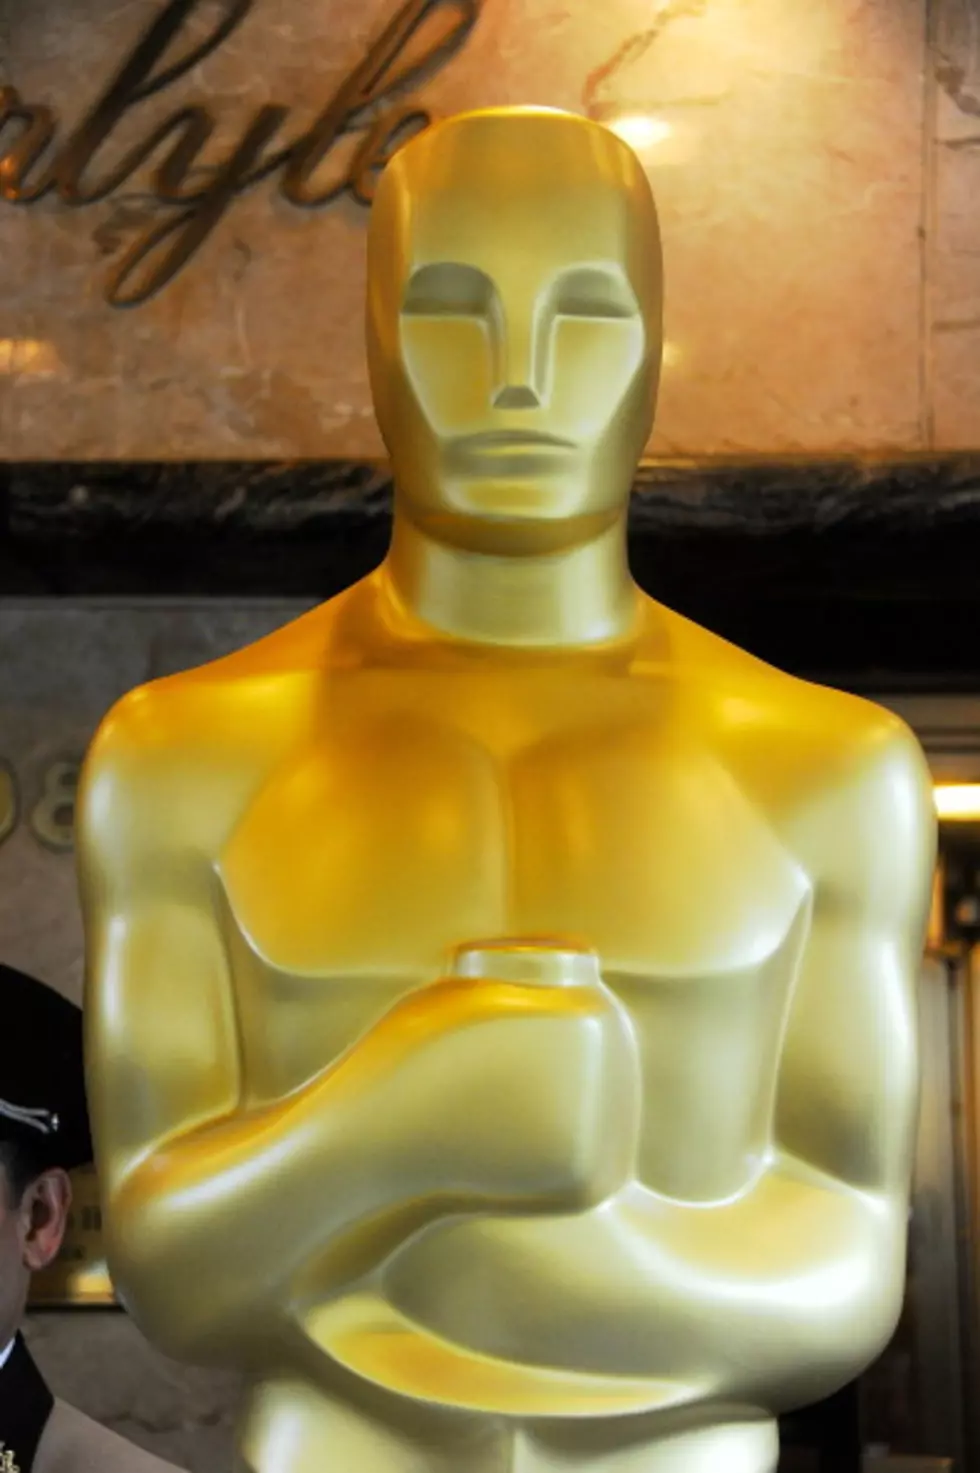 Memorable Oscar Moments [VIDEO]